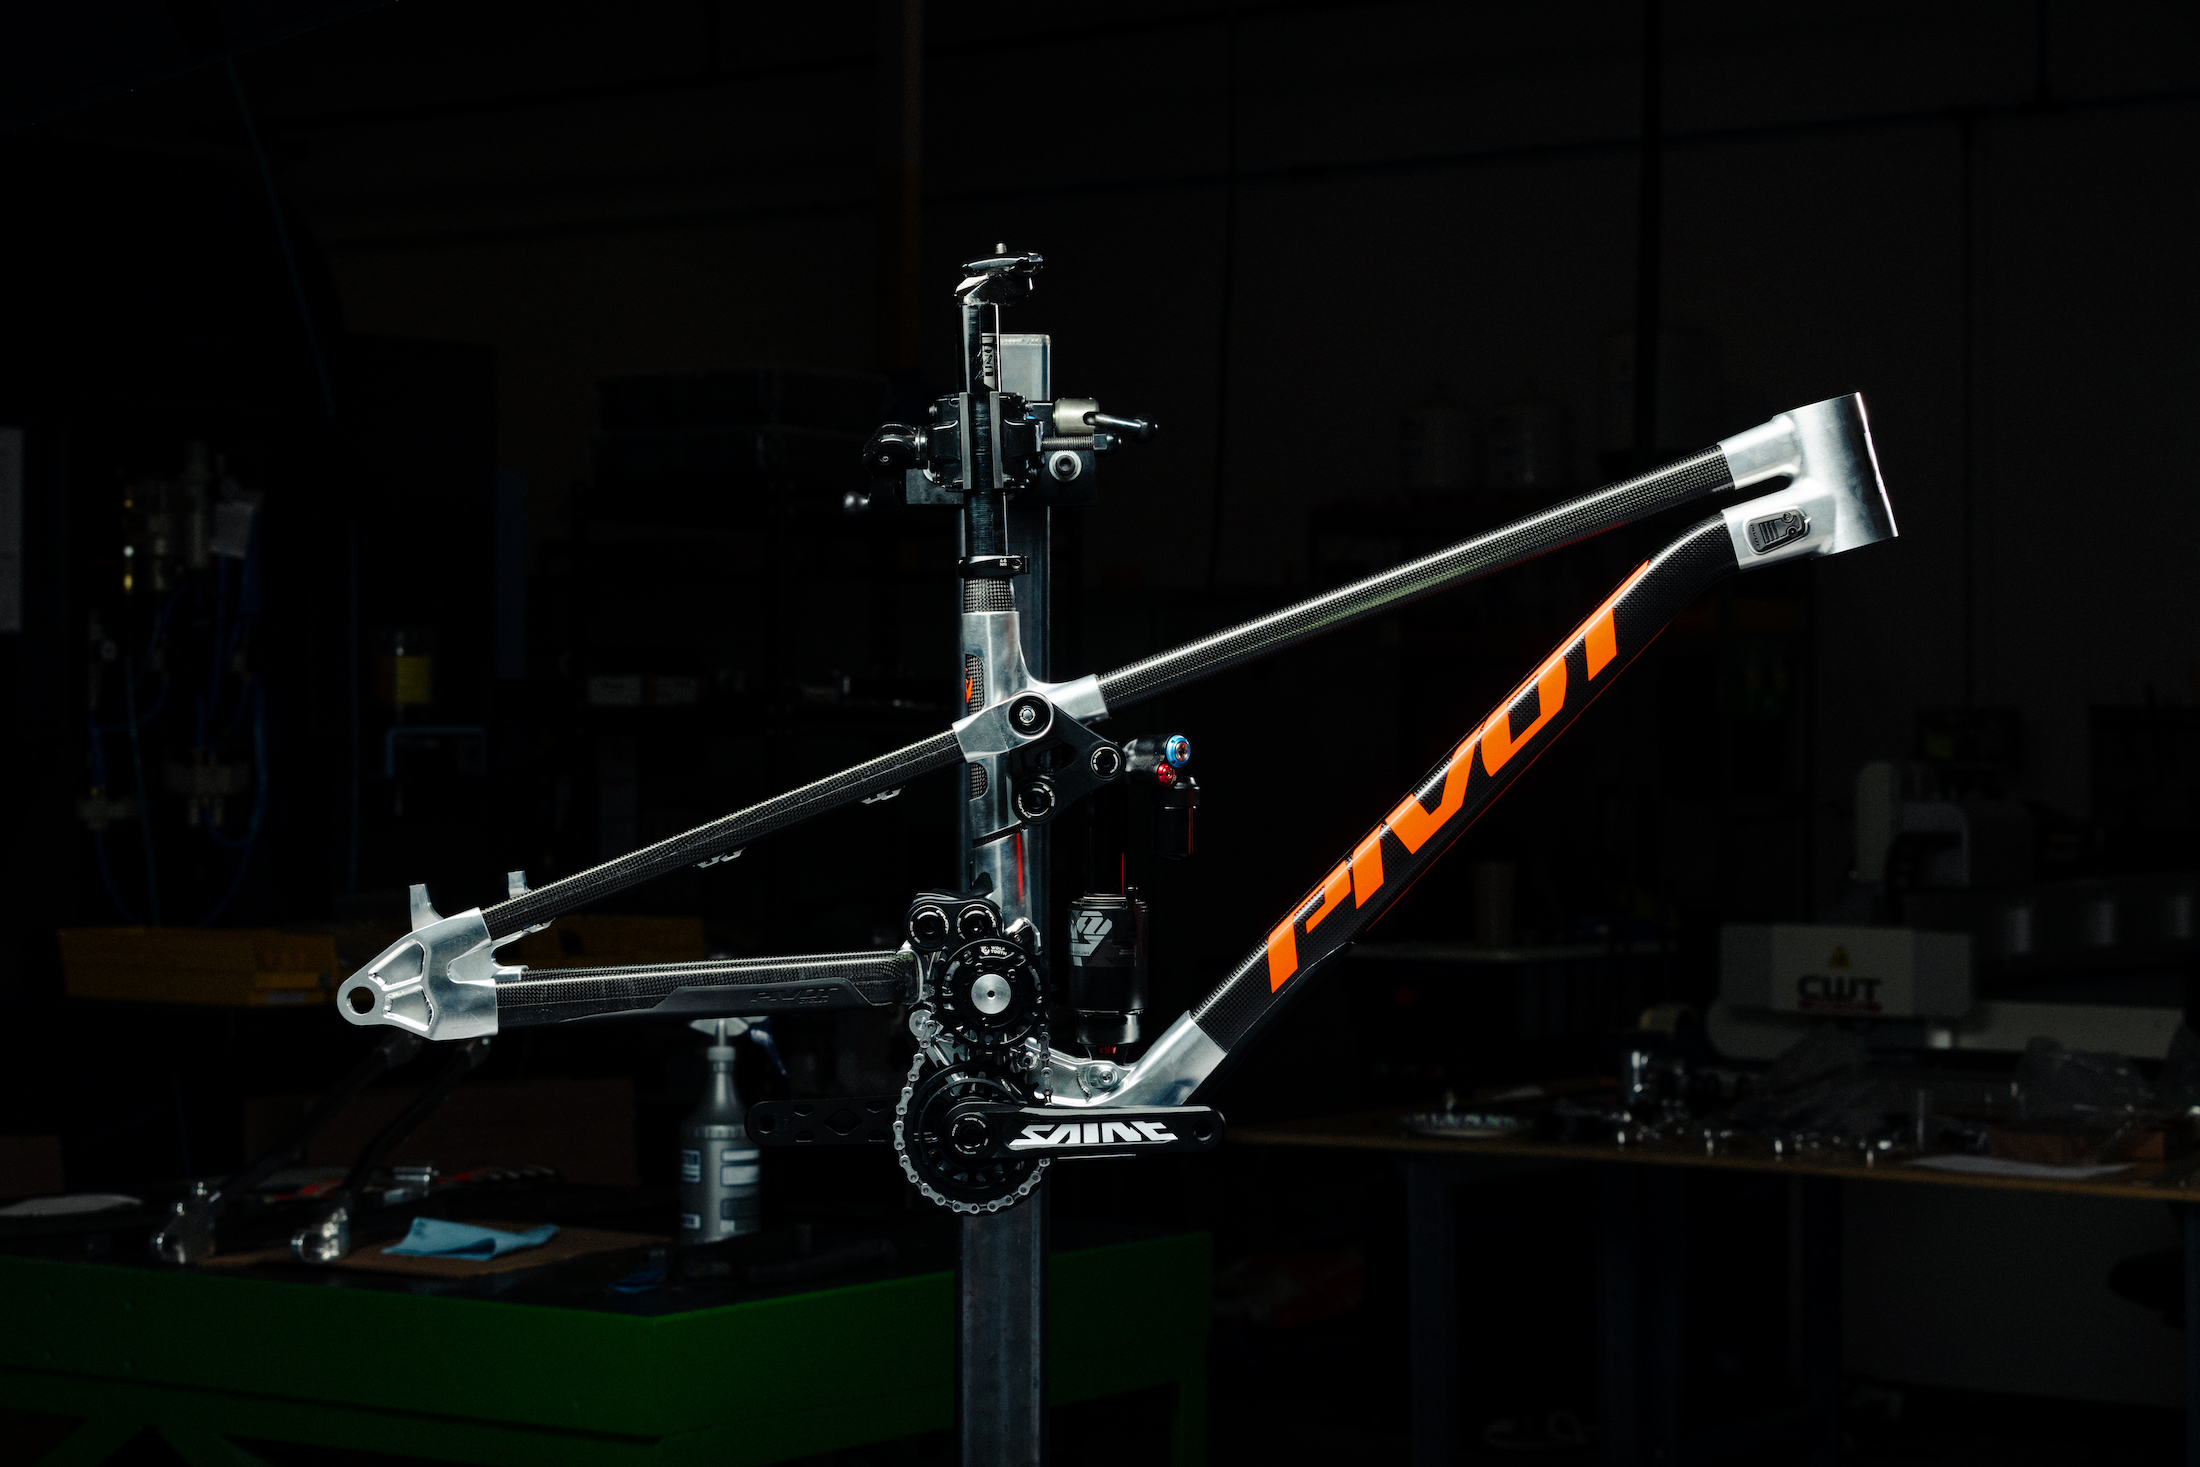 Behindthescenes with Pivot's radical new prototype downhill bikes